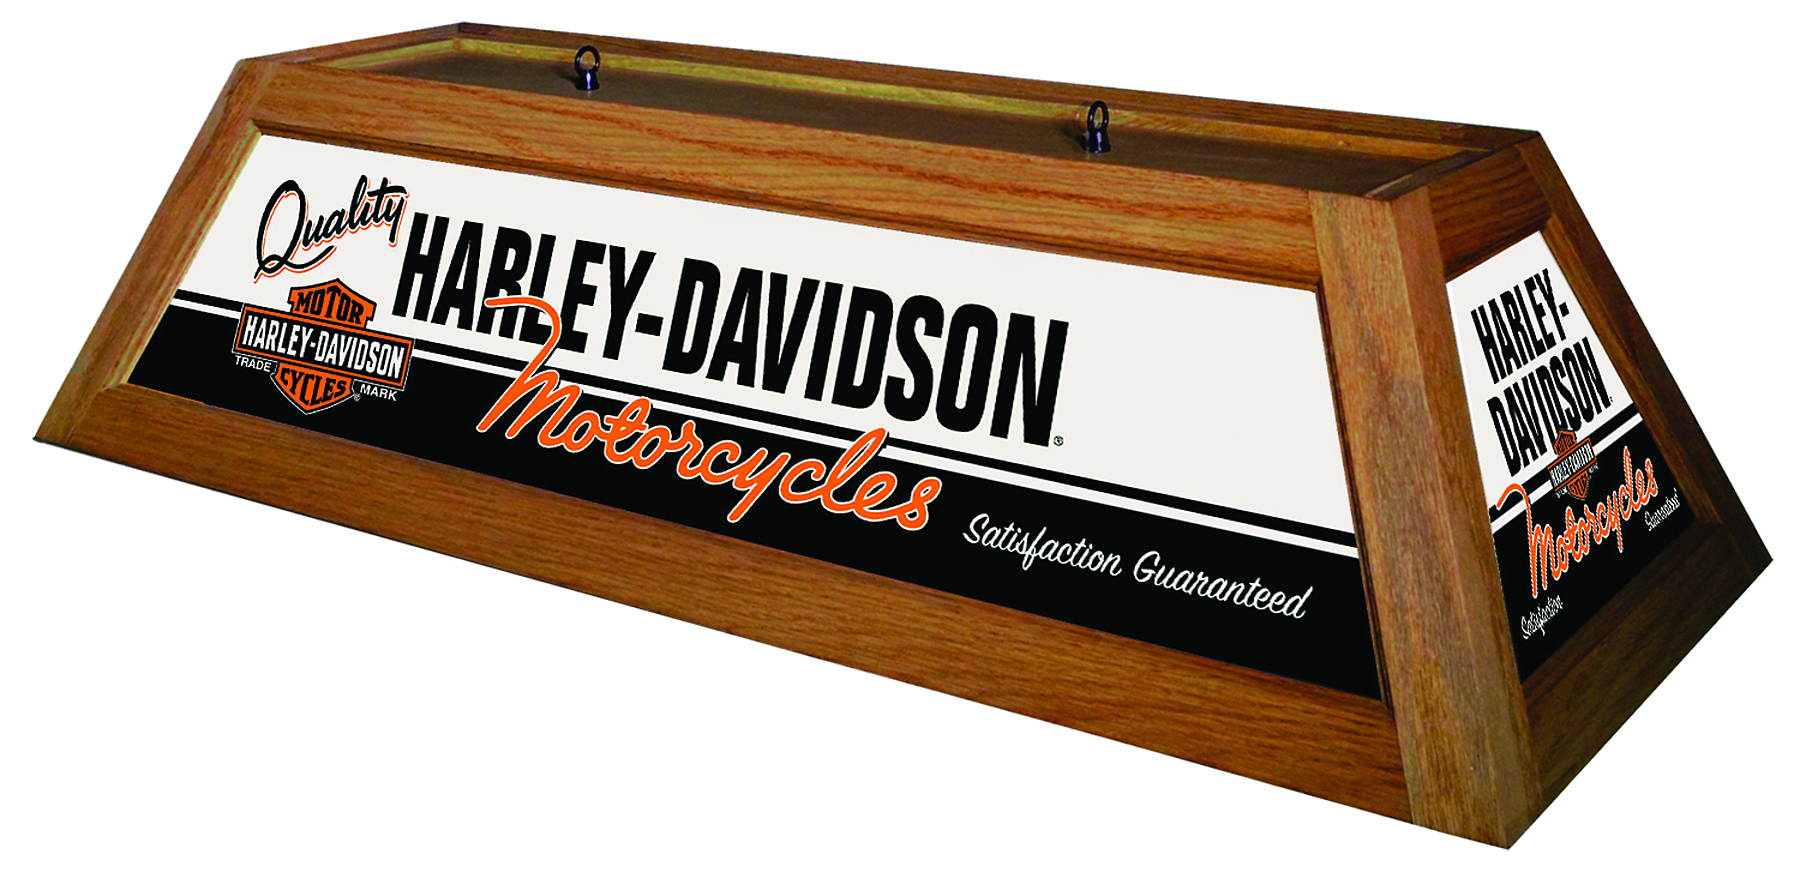 Harley-Davidson Quality Motorcycles Billiard Lamp Brown Finish HDL-11781